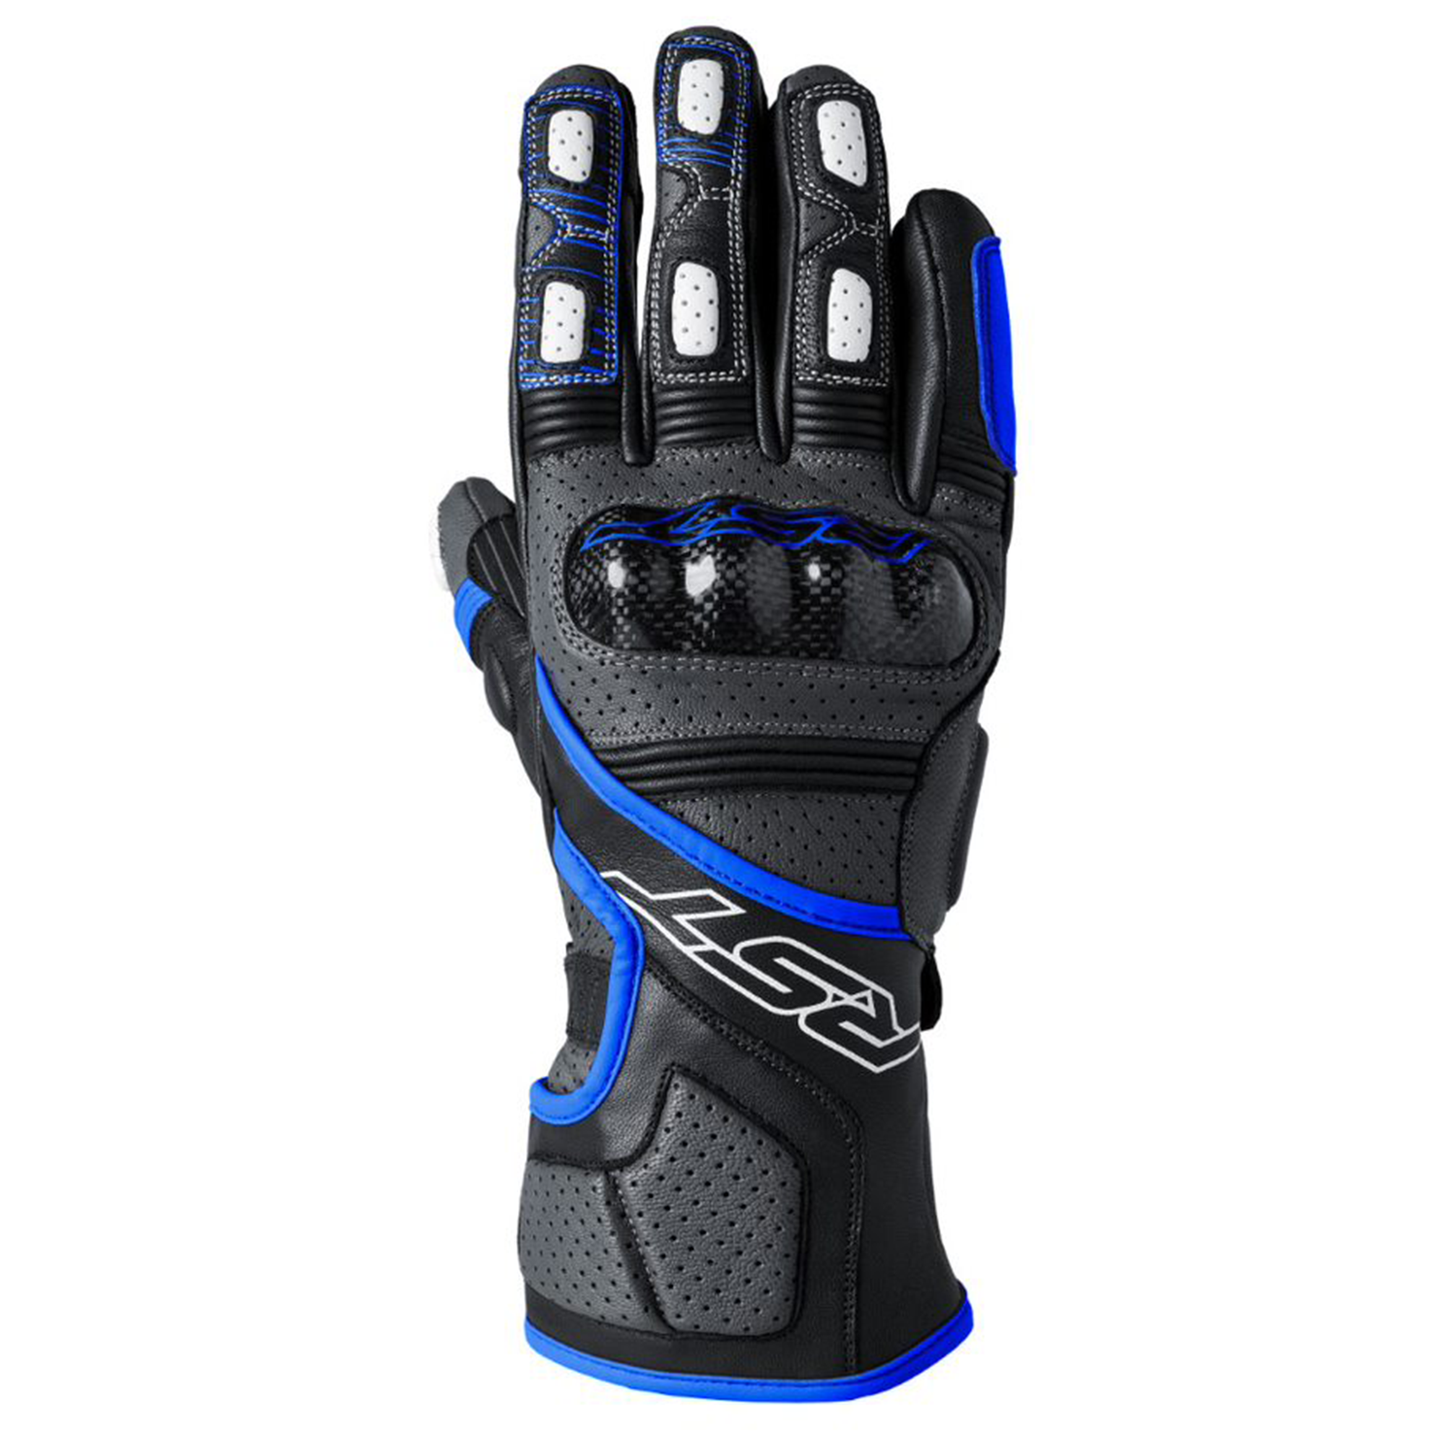 RST Fulcrum (CE) Leather Gloves - Grey/Blue/Black